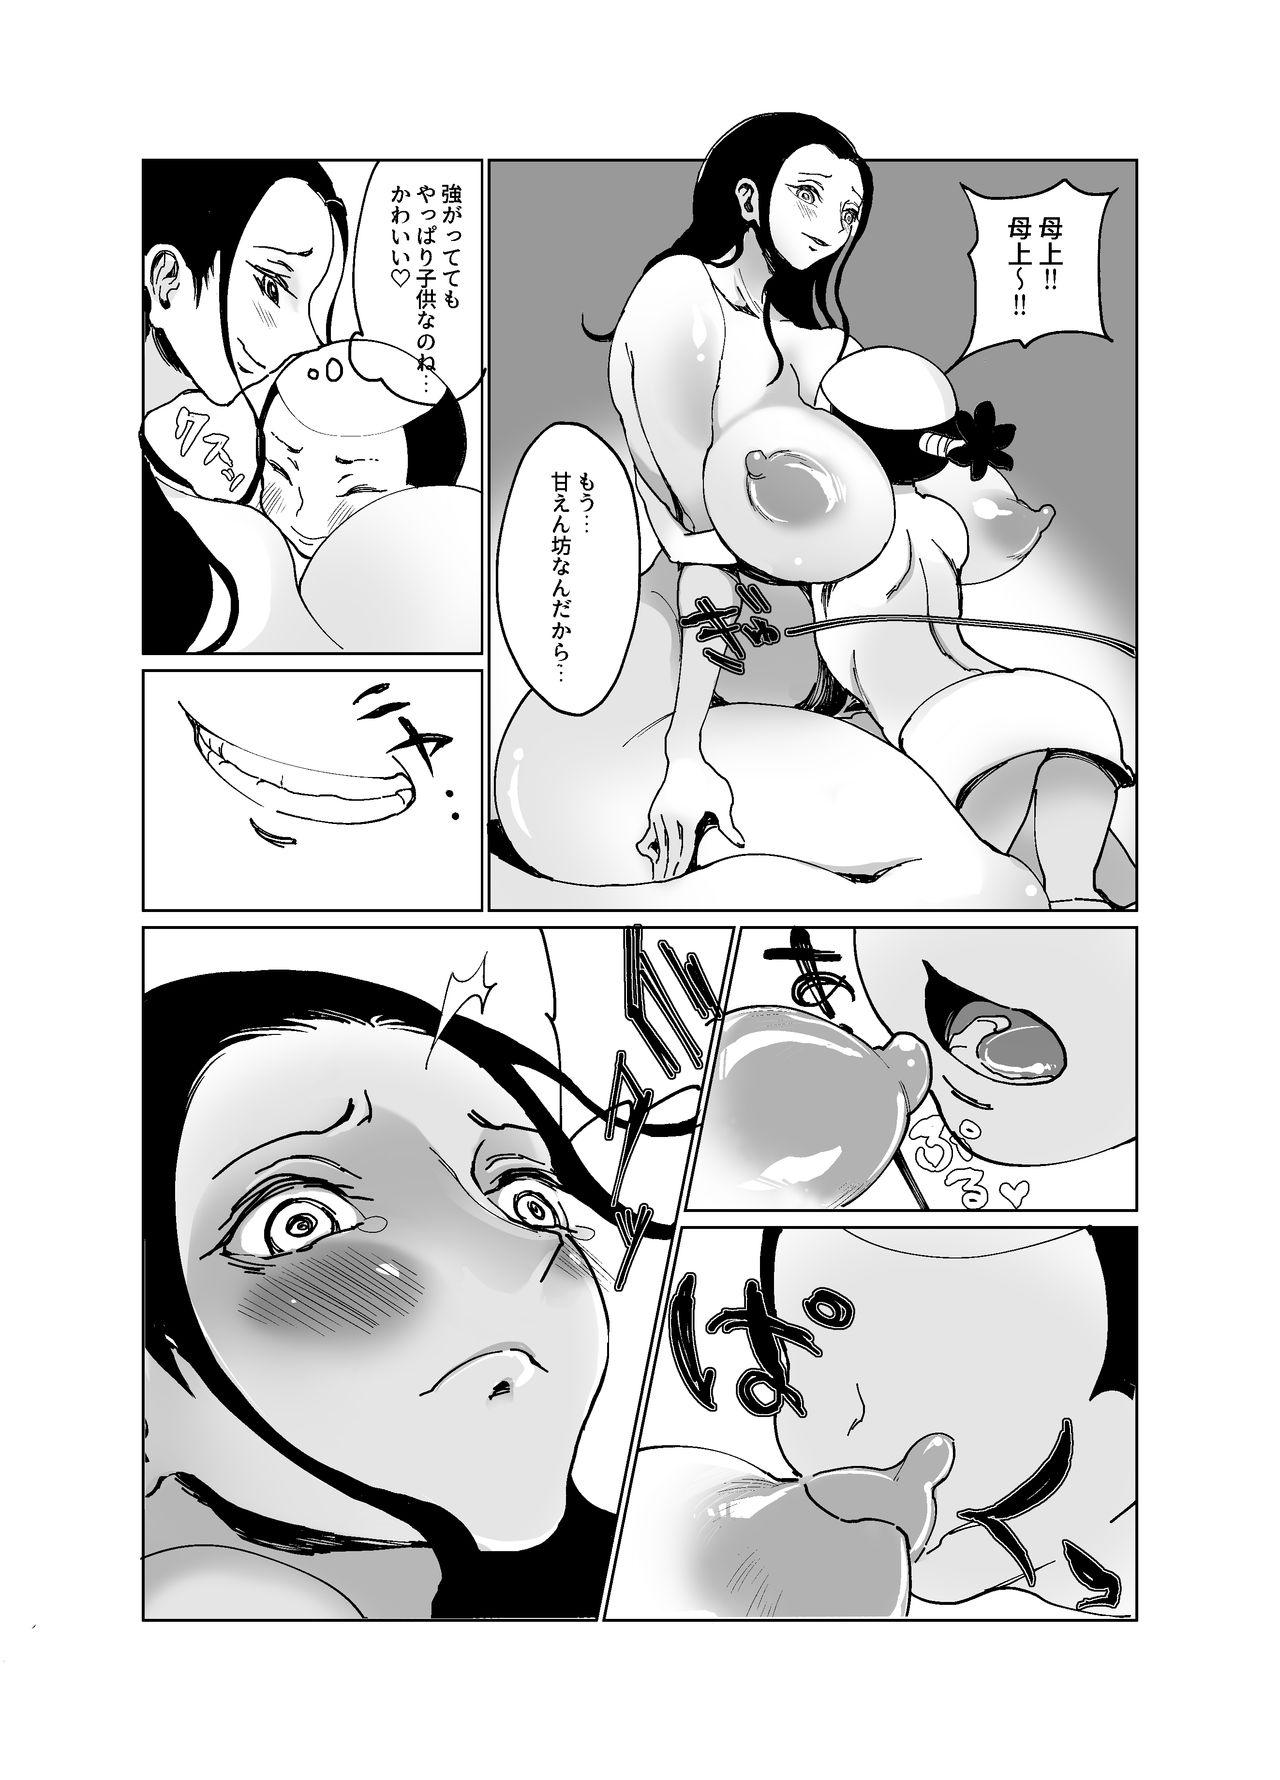 Milk Kuso Gaki Vs Nico Robin - One piece Whore - Page 4